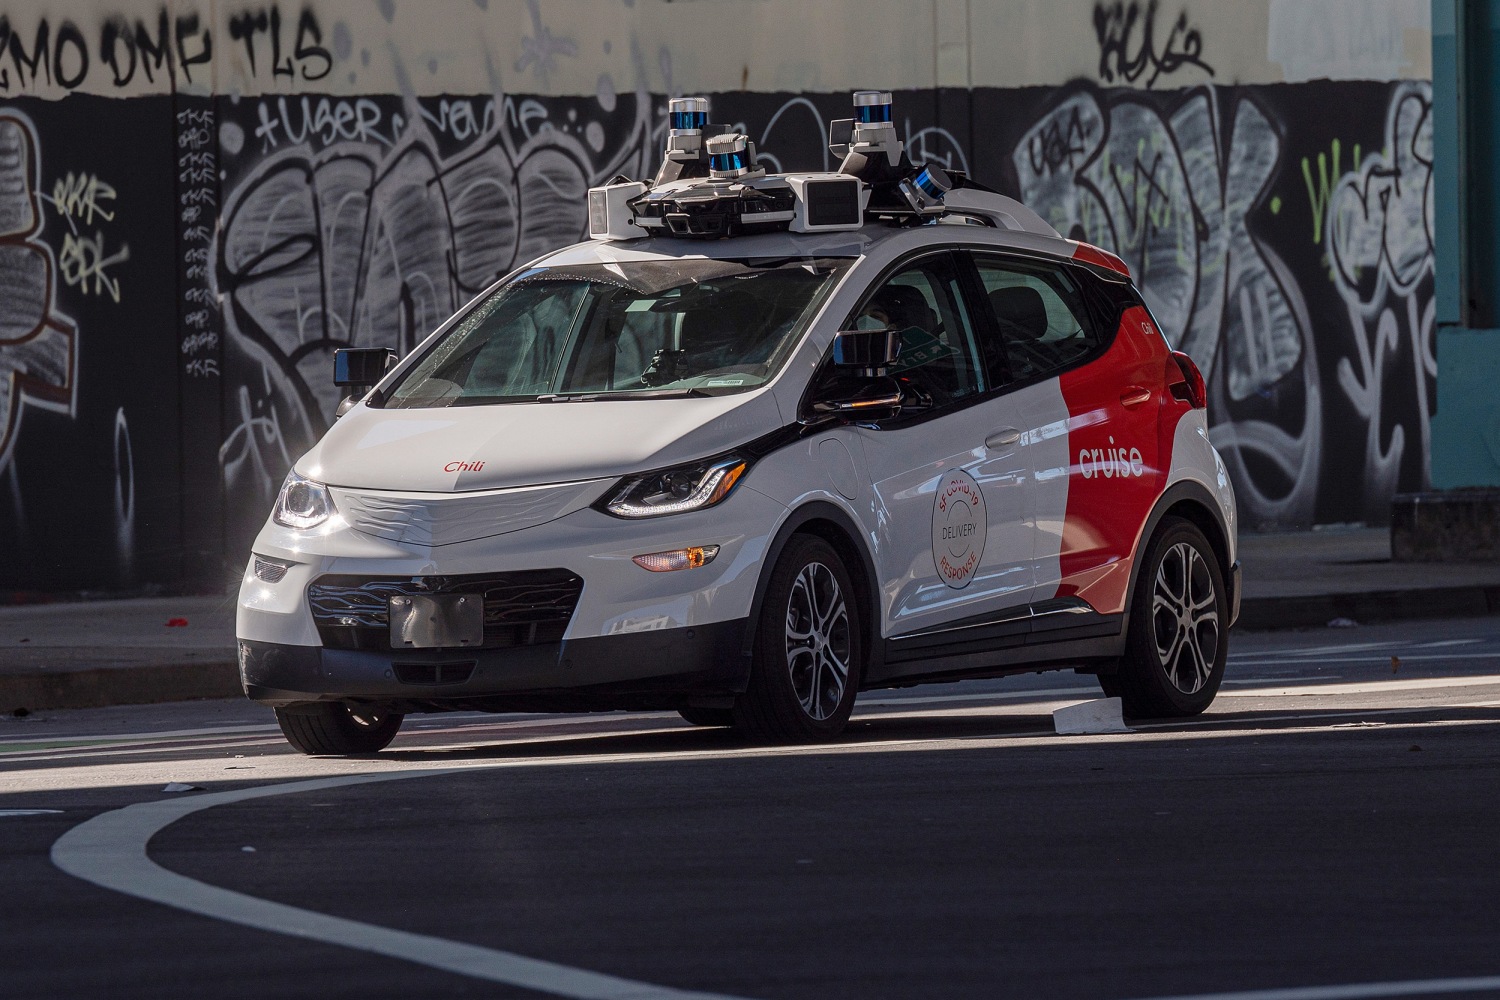 The Best Self-Driving Cars of 2023, Best Autonomous Cars